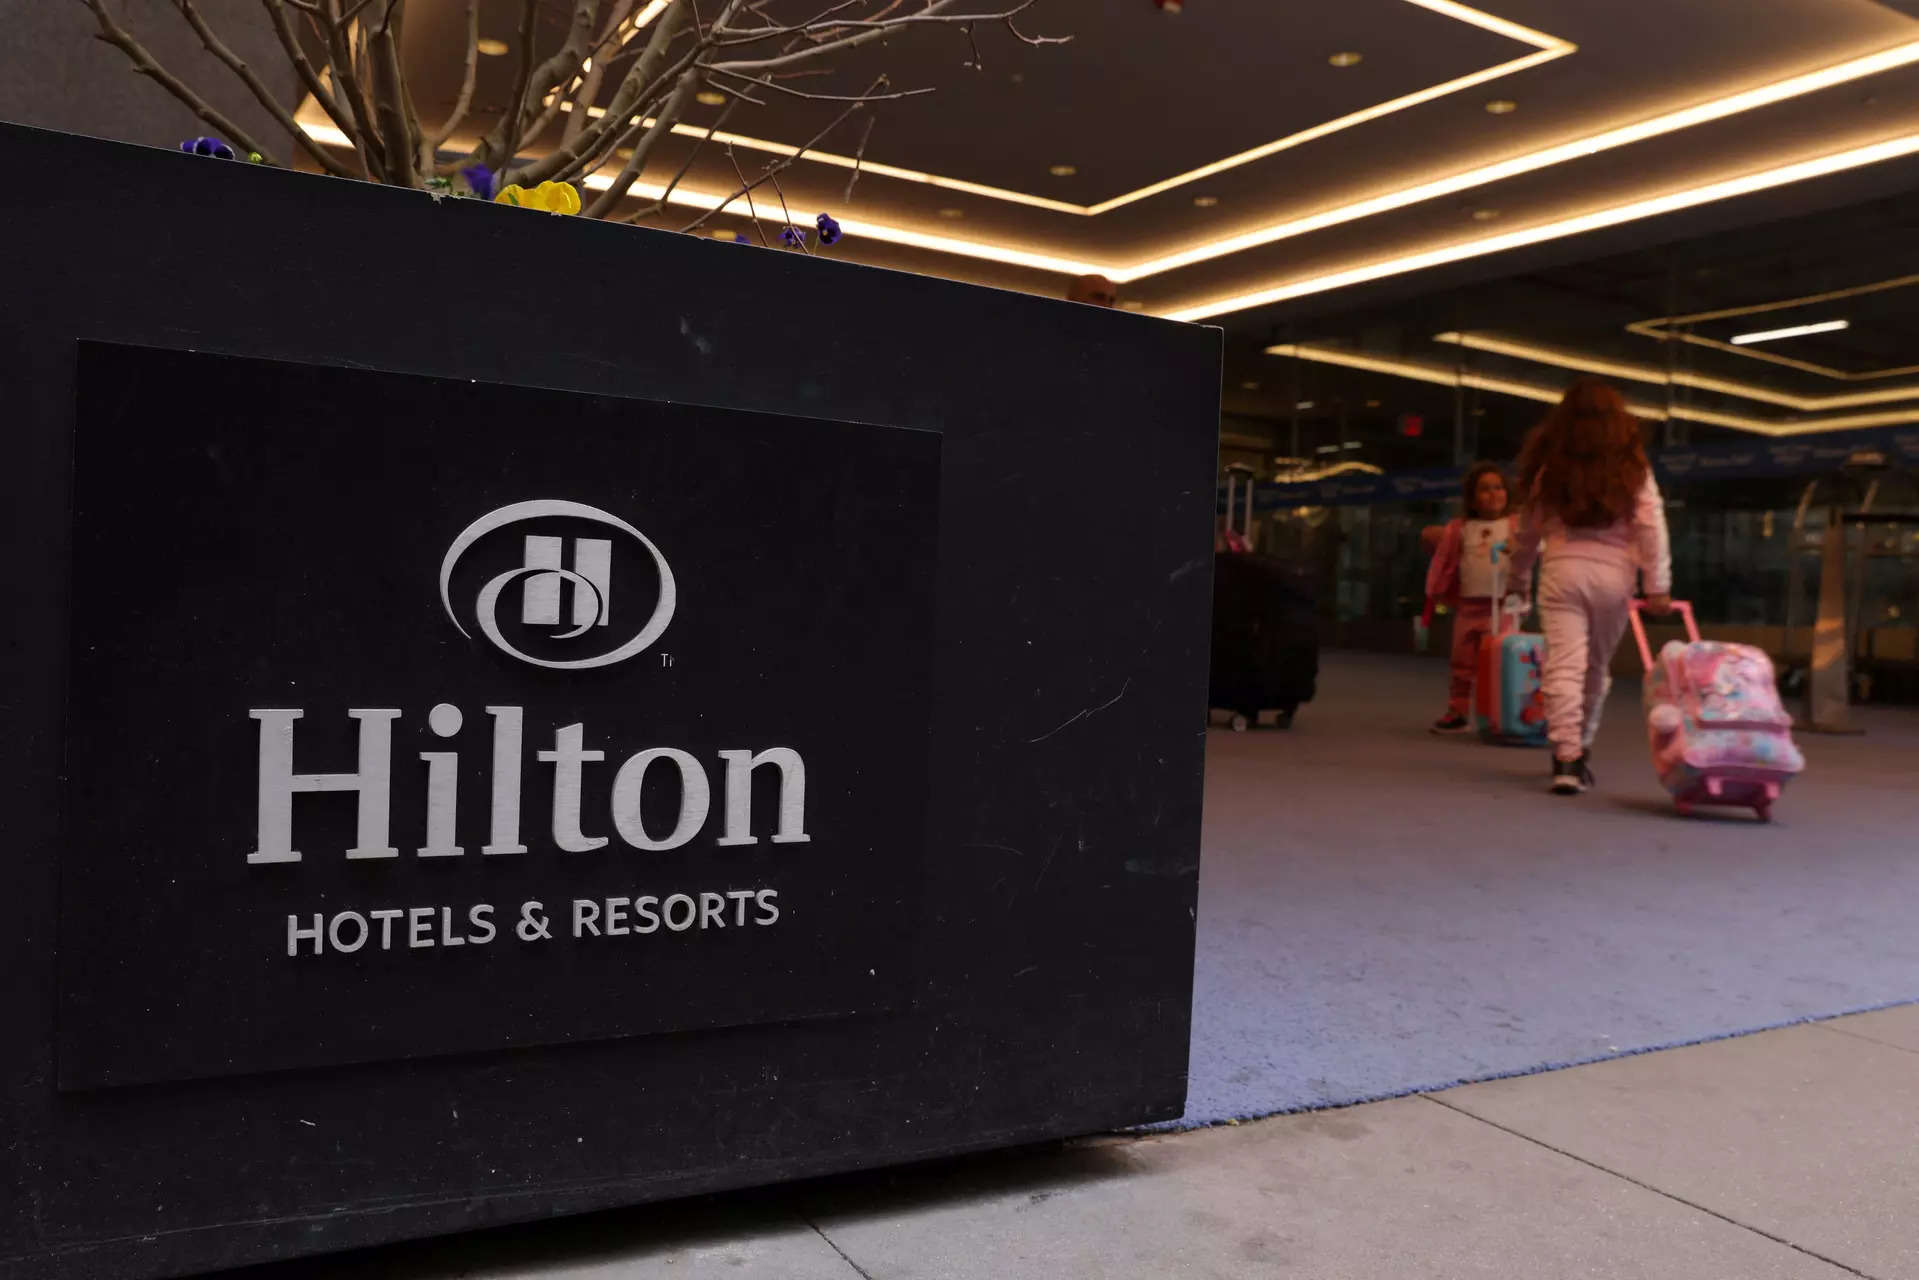 Hilton Hotels: Hilton beats Q2 estimates on strong travel demand